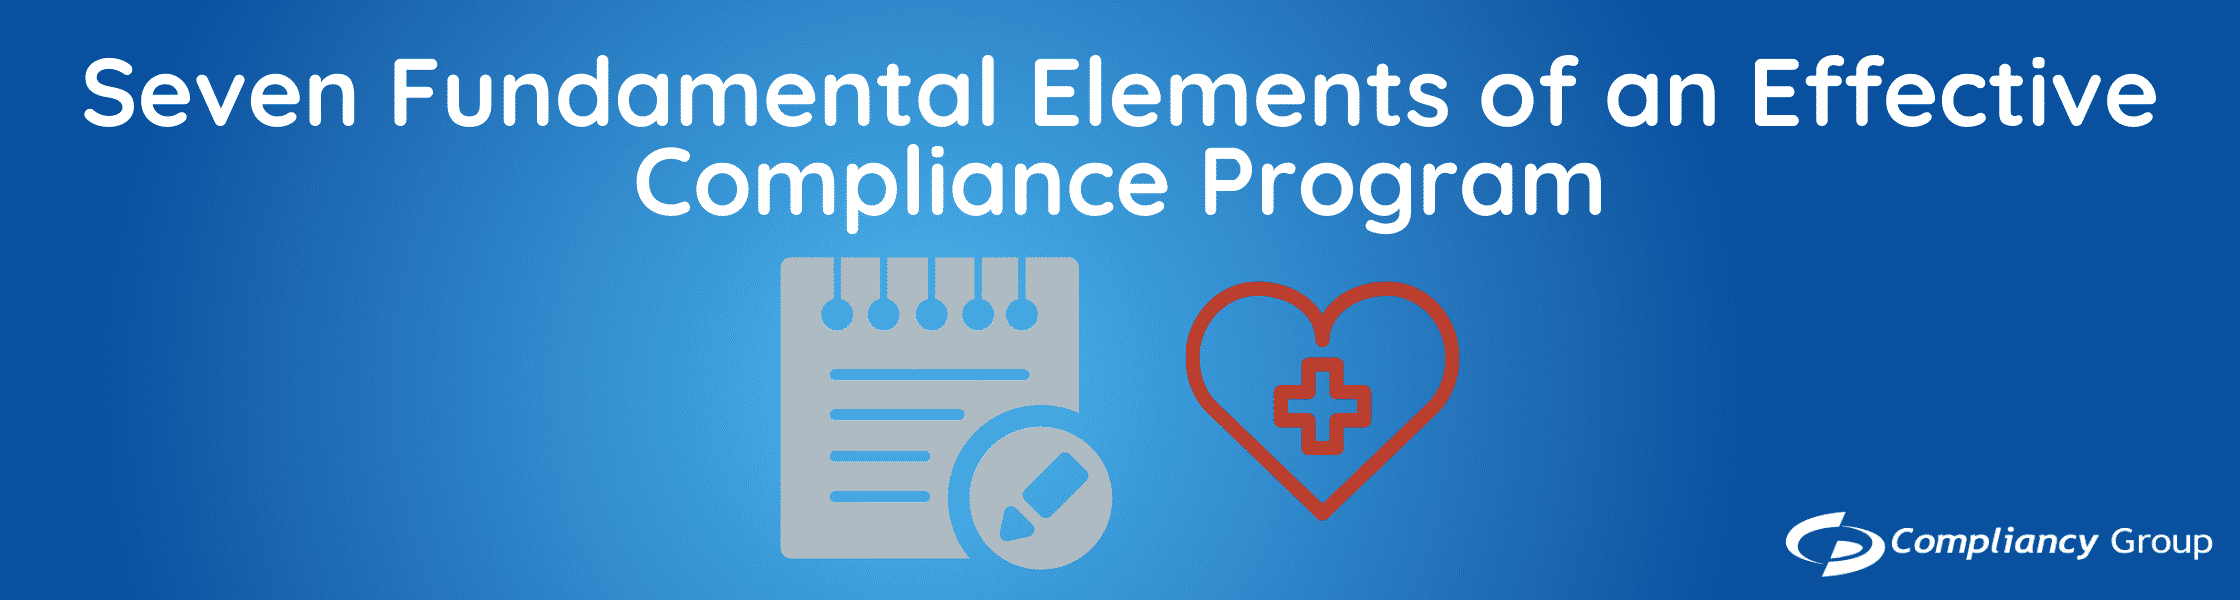 Seven Fundamental Elements of an Effective Compliance Program